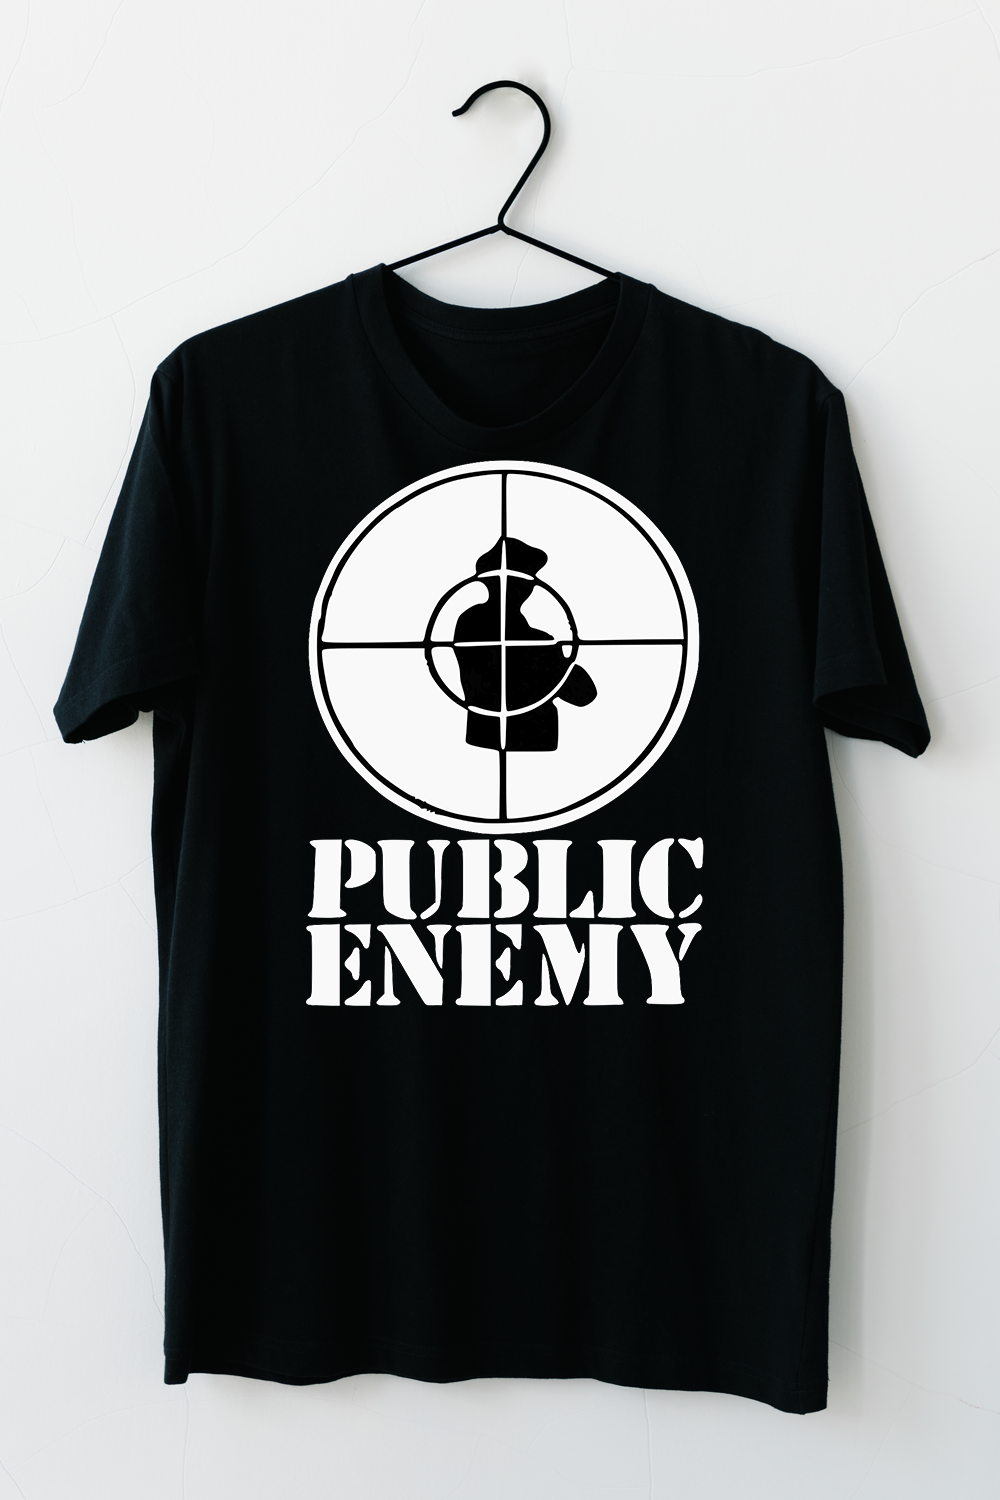 Public Enemy T-Shirt, Rebel Streetwear, Chuck D, Hiphop, 80s